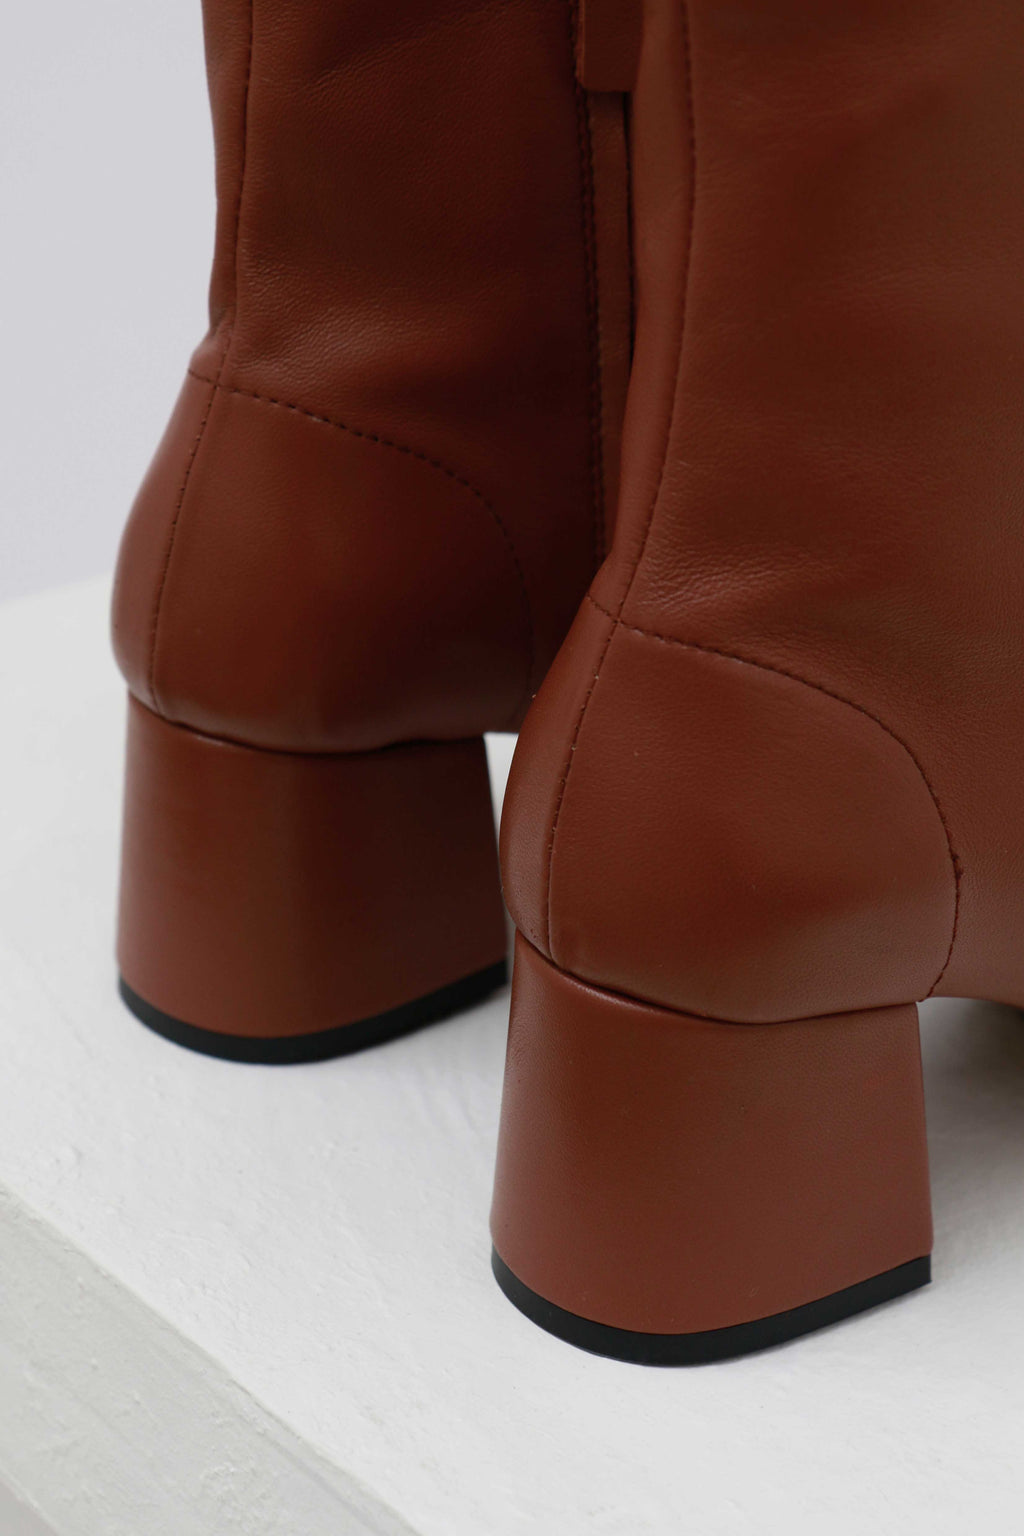  Coronel Tapioca Women's Serraje Lateral Ankle Boots, Brown  Brown 0, 5.5 UK